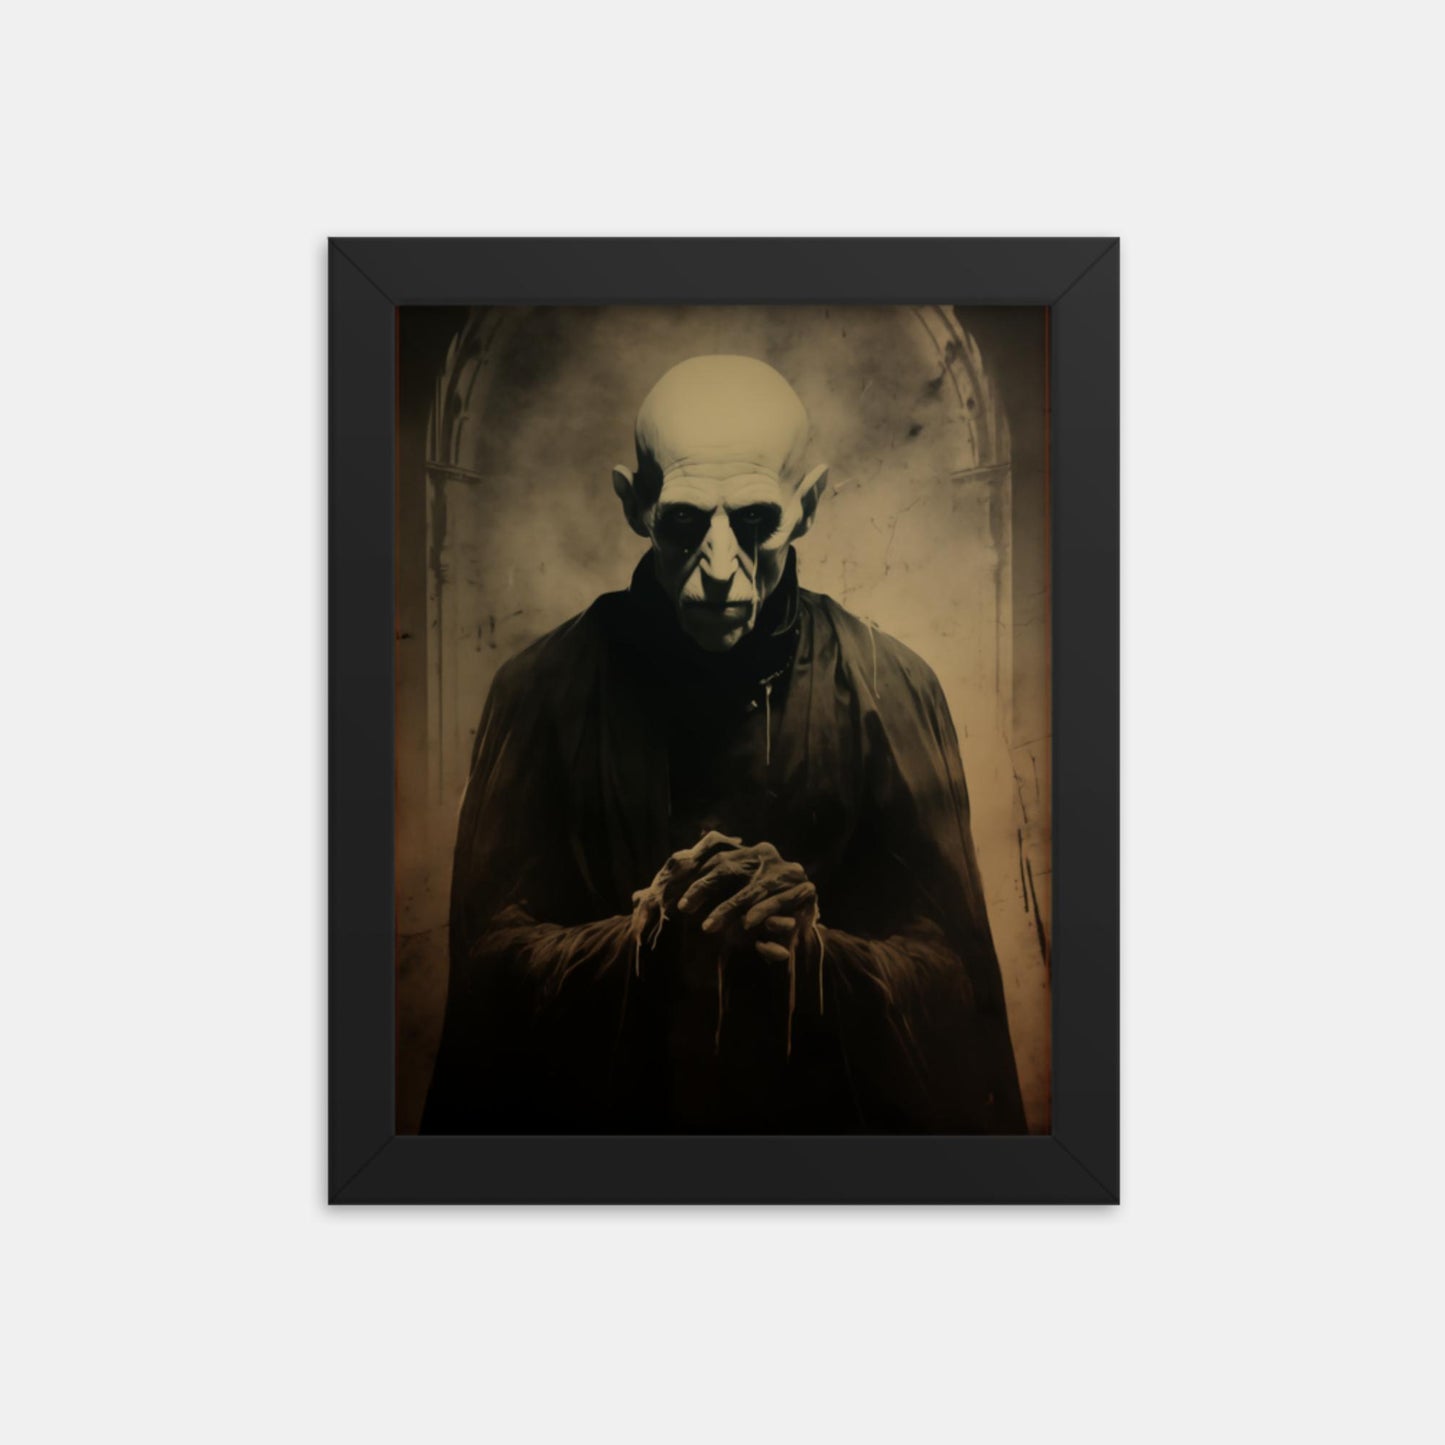 Beware the shadow of Nosferatu, the vampire. Tribute Framed Print